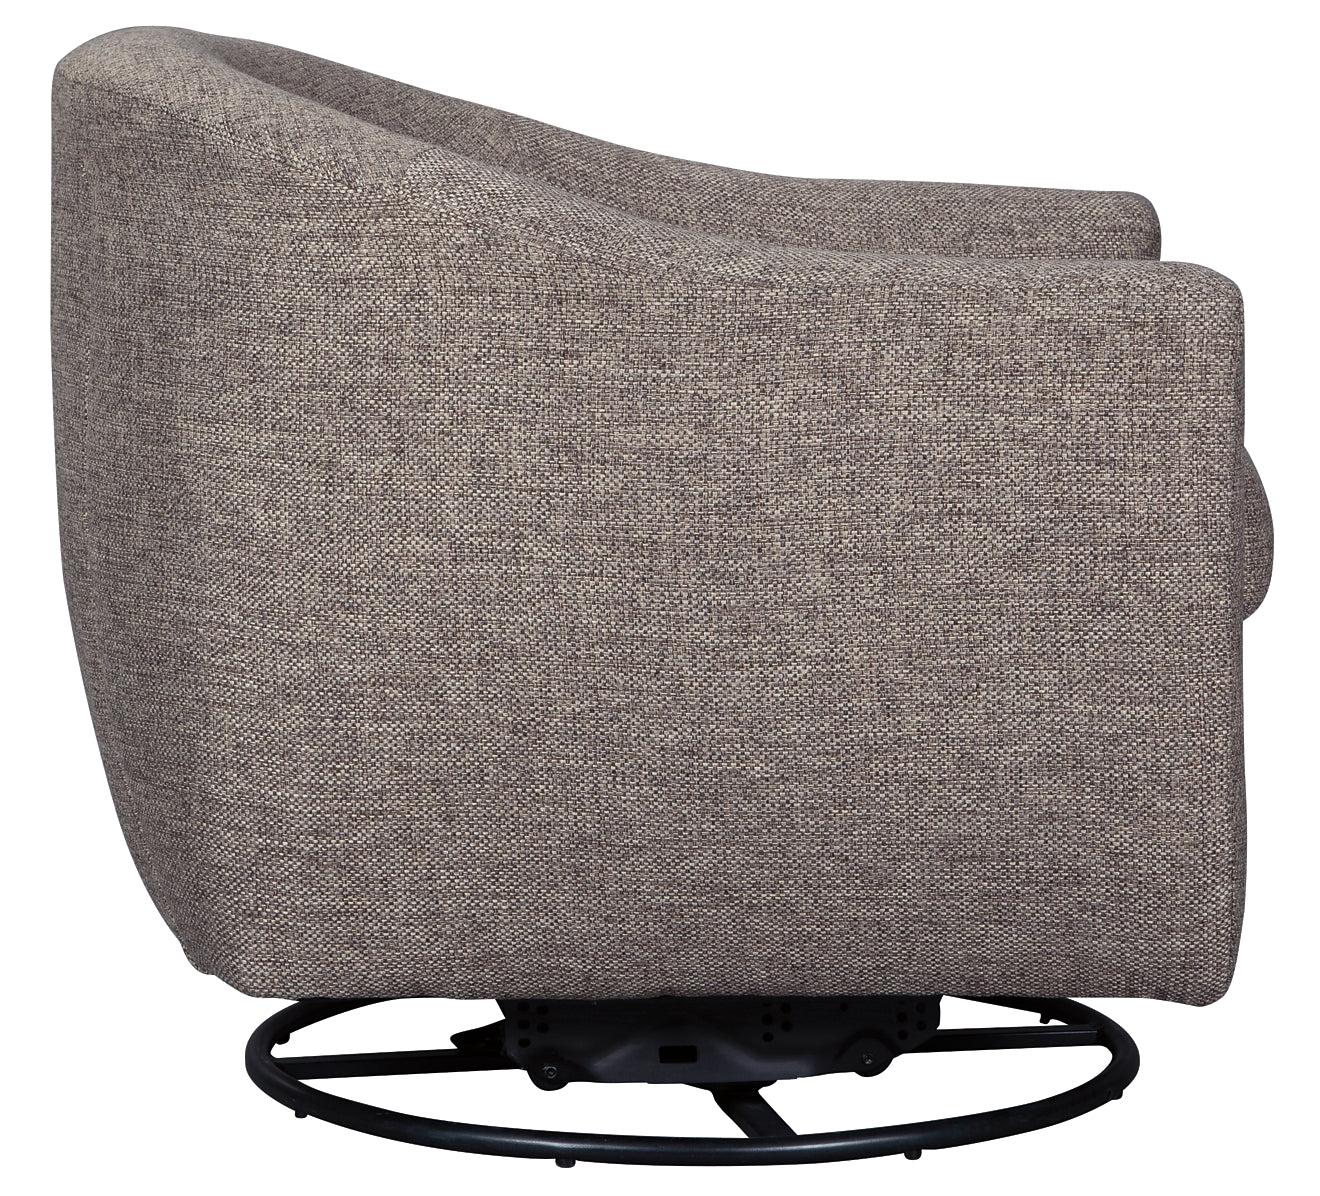 Upshur Swivel Glider Accent Chair Smyrna Furniture Outlet